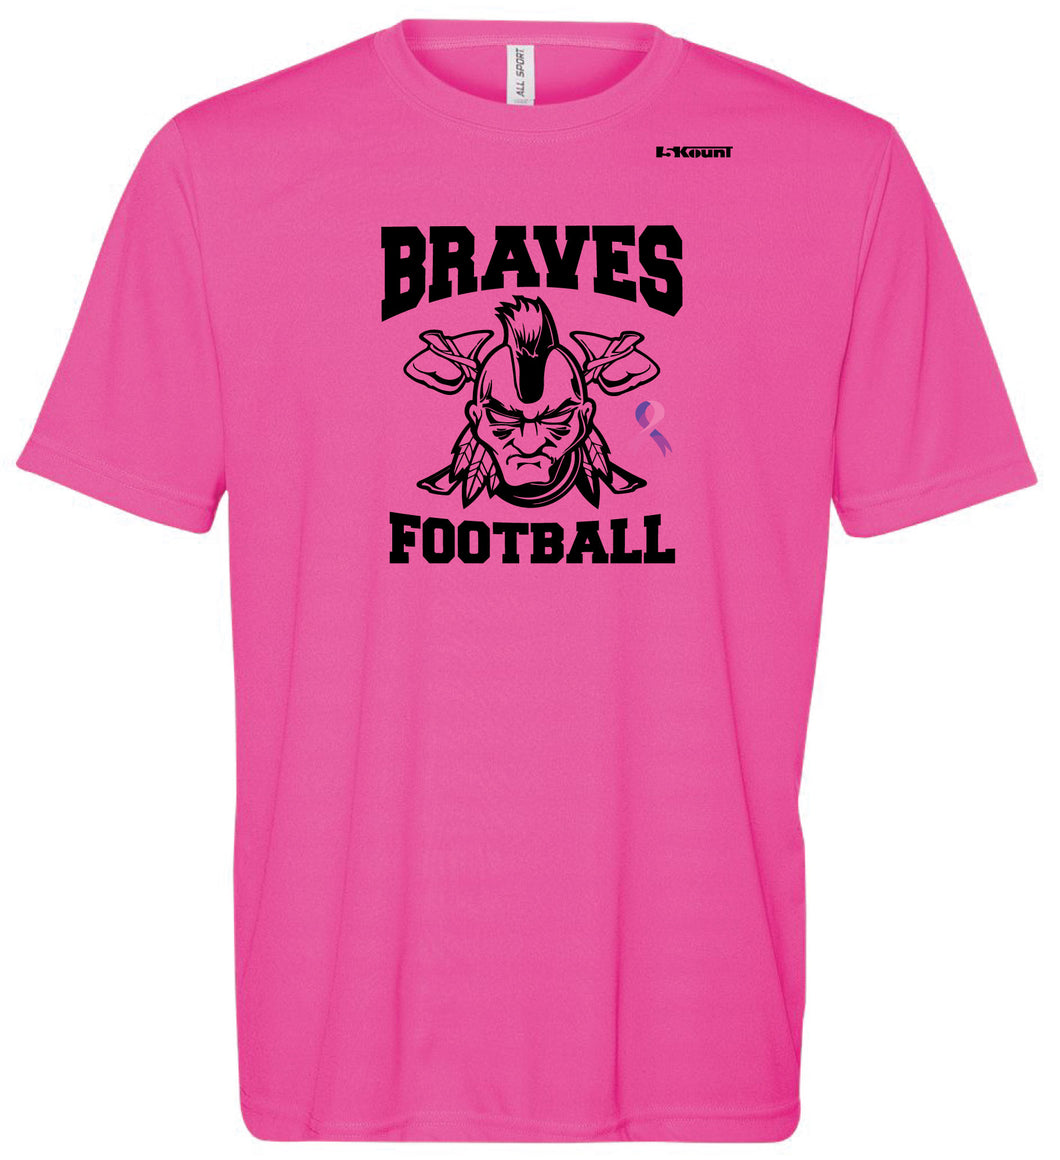 Braves Football Dryfit Performance Tee - Sport Charity Pink - 5KounT2018